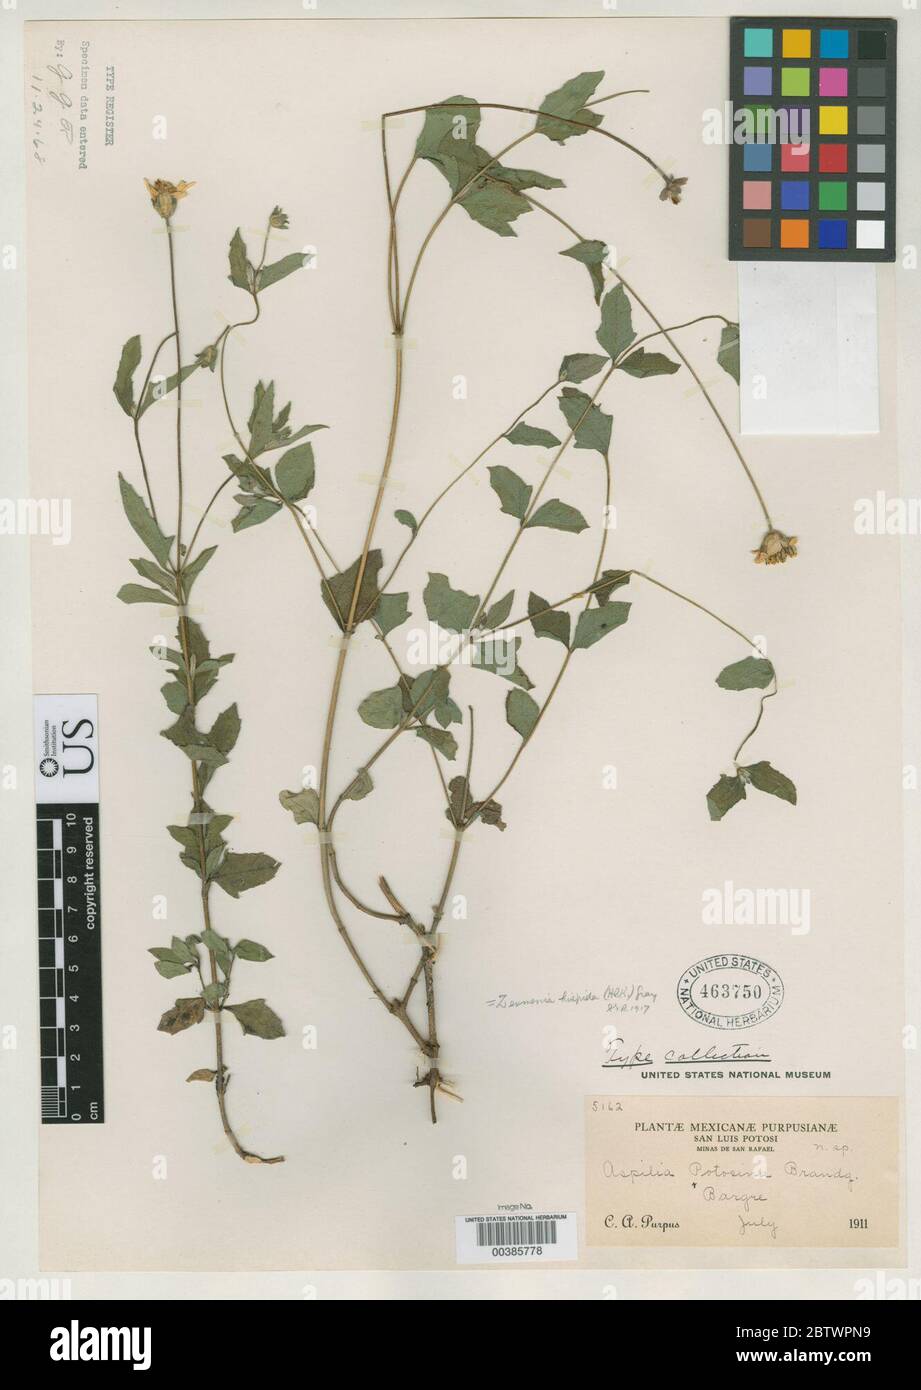 Aspilia potosina Brandegee. Stock Photo